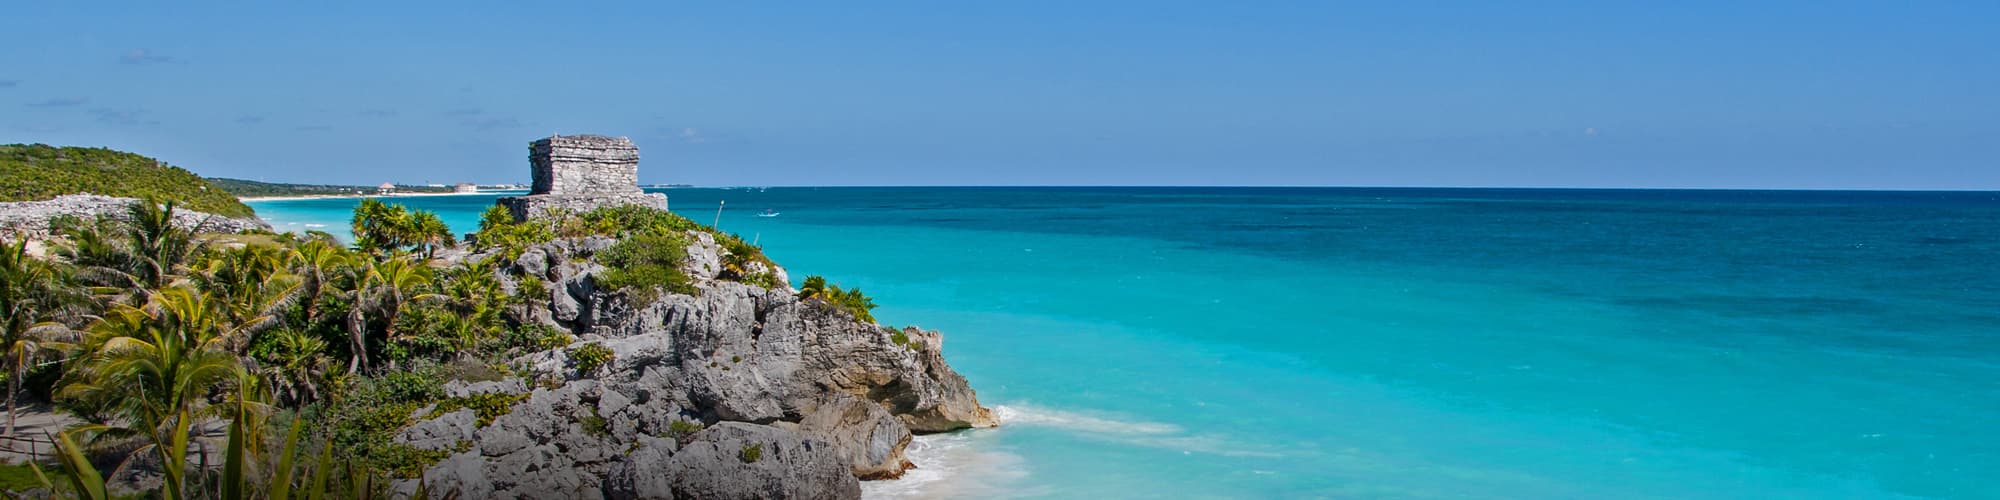 Découverte Yucatan et Caraïbes © Pakhnyushchyy / iStock